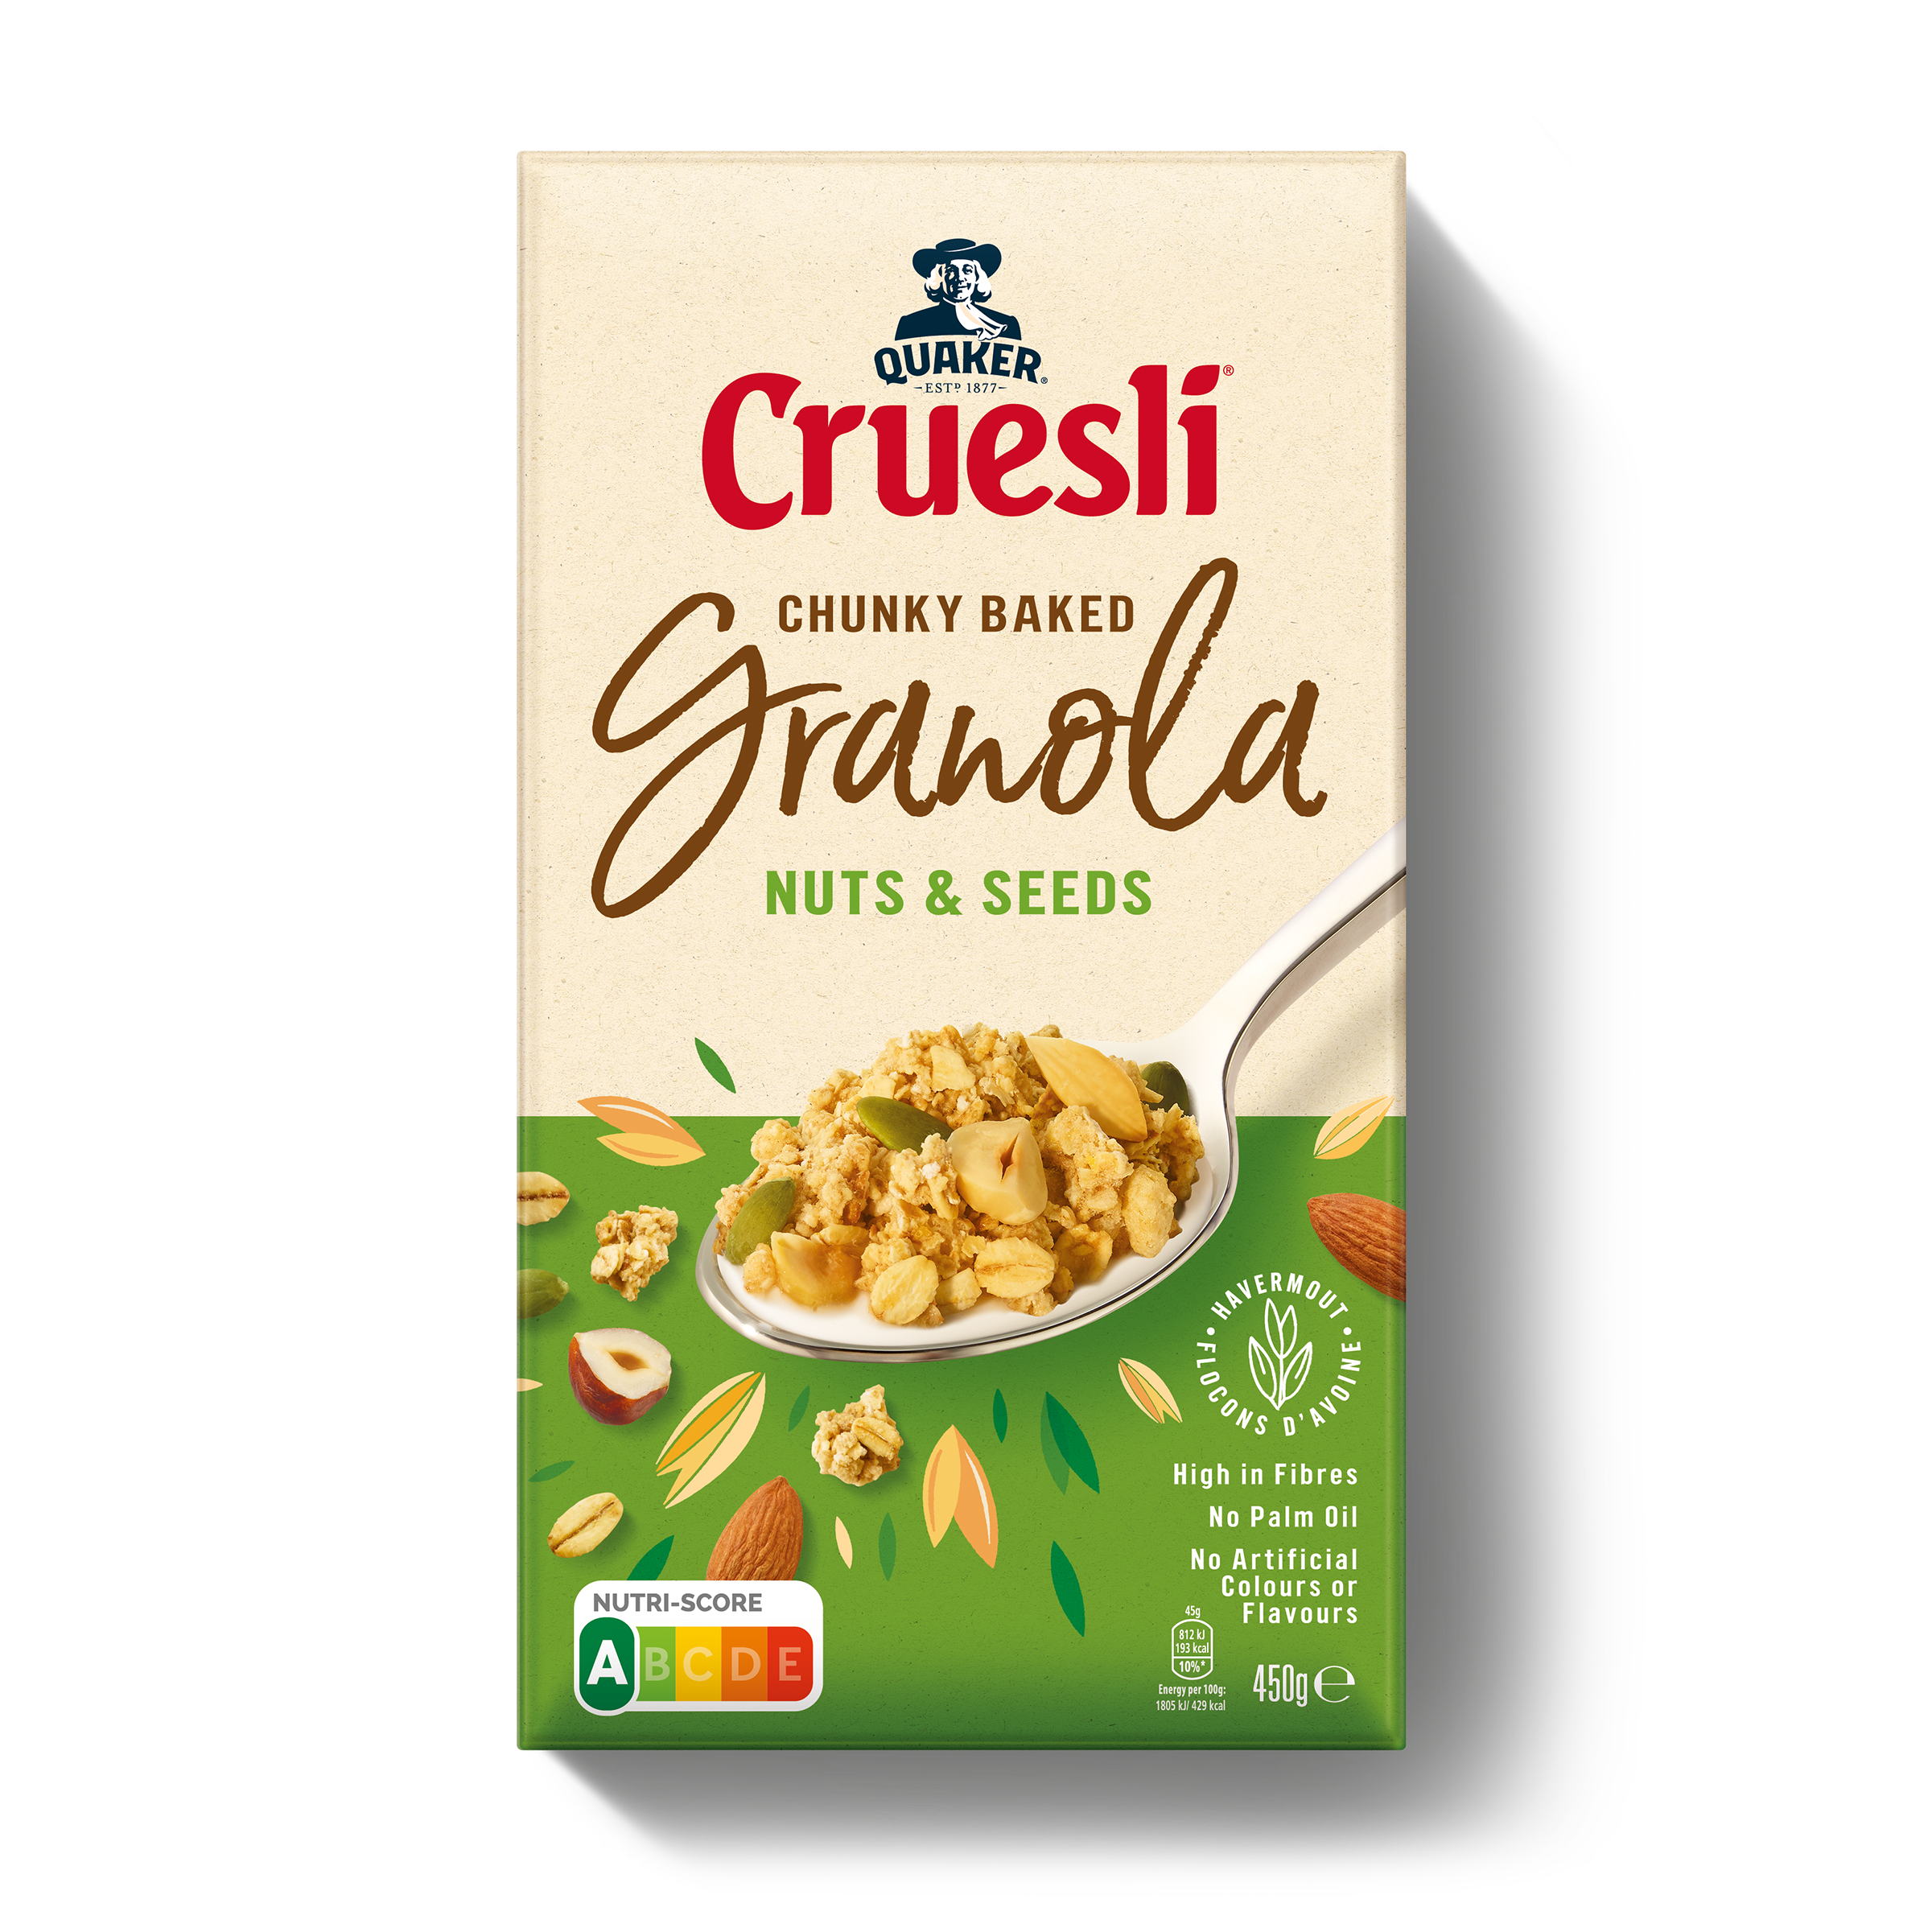 Global Food News on X: Quaker Cruesli • Frambalicious • from @quaker  Netherlands #quaker #pepsico @PepsiCo #frambalicious #oatmeal #cruesli  #quakercruesli  / X